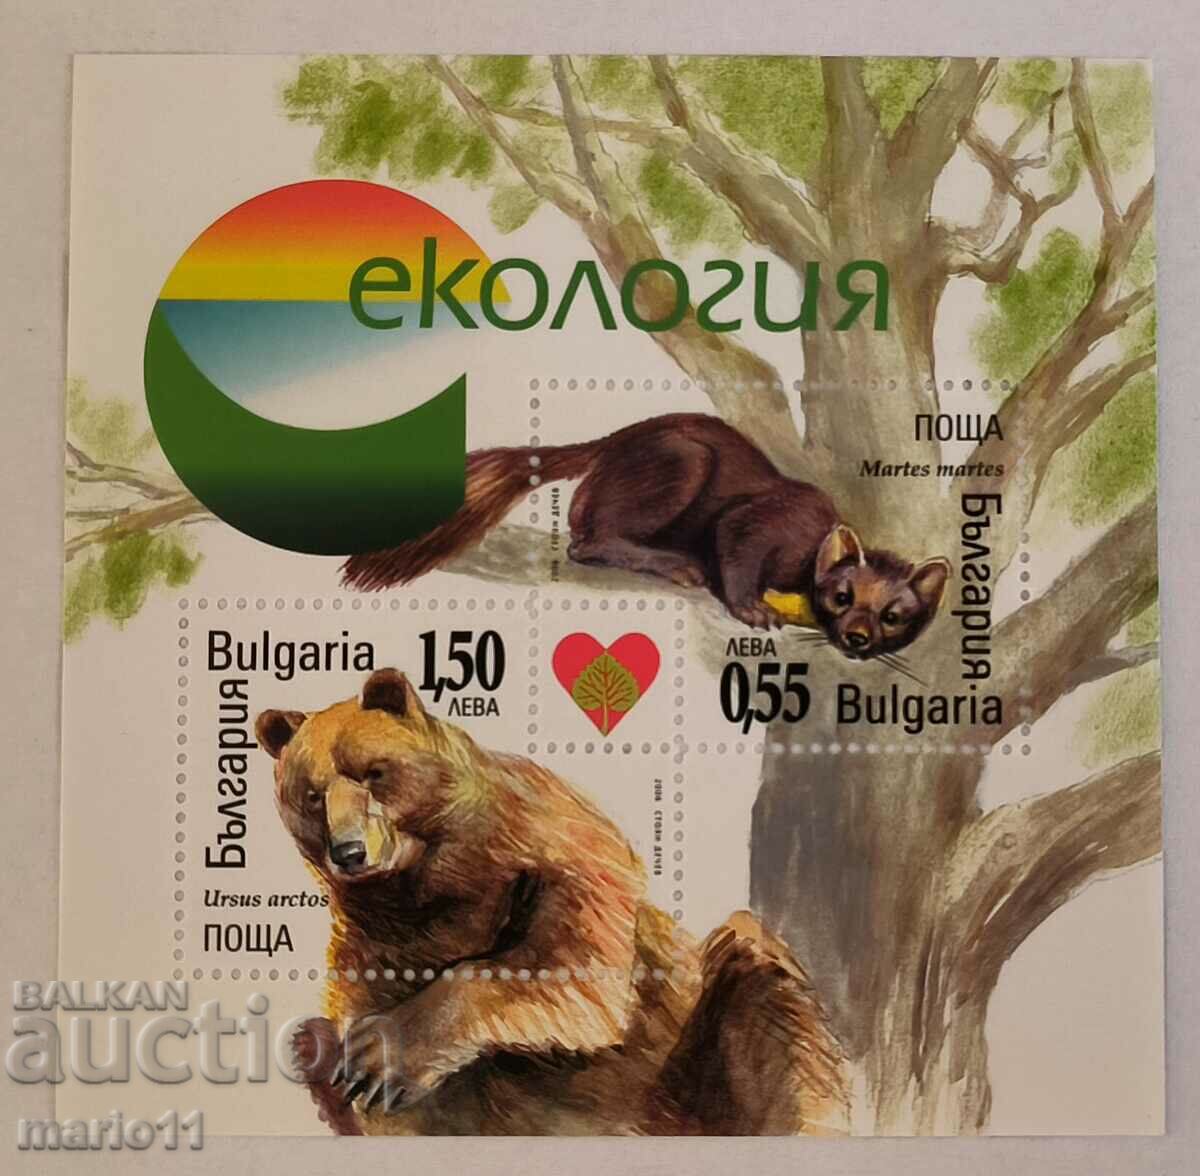 Bulgaria - 4727 - Ecology, block